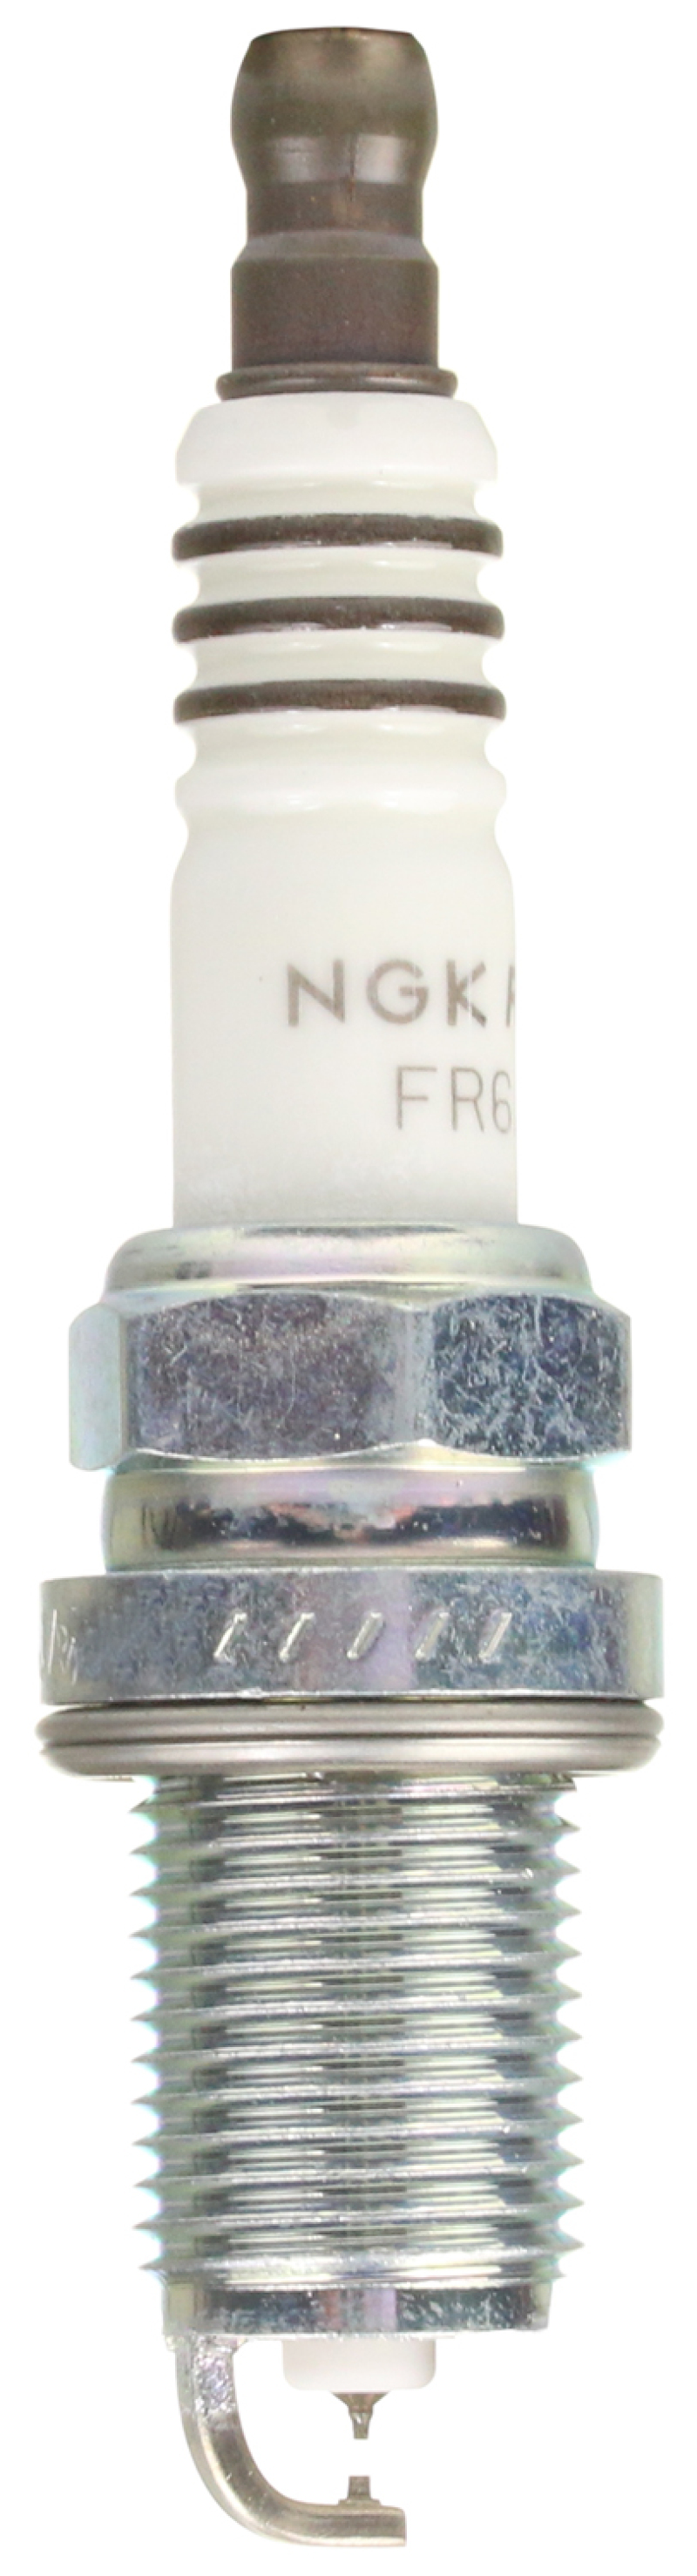 NGK Ruthenium HX Spark Plug Box of 4 (FR6AHX-S) - 94279